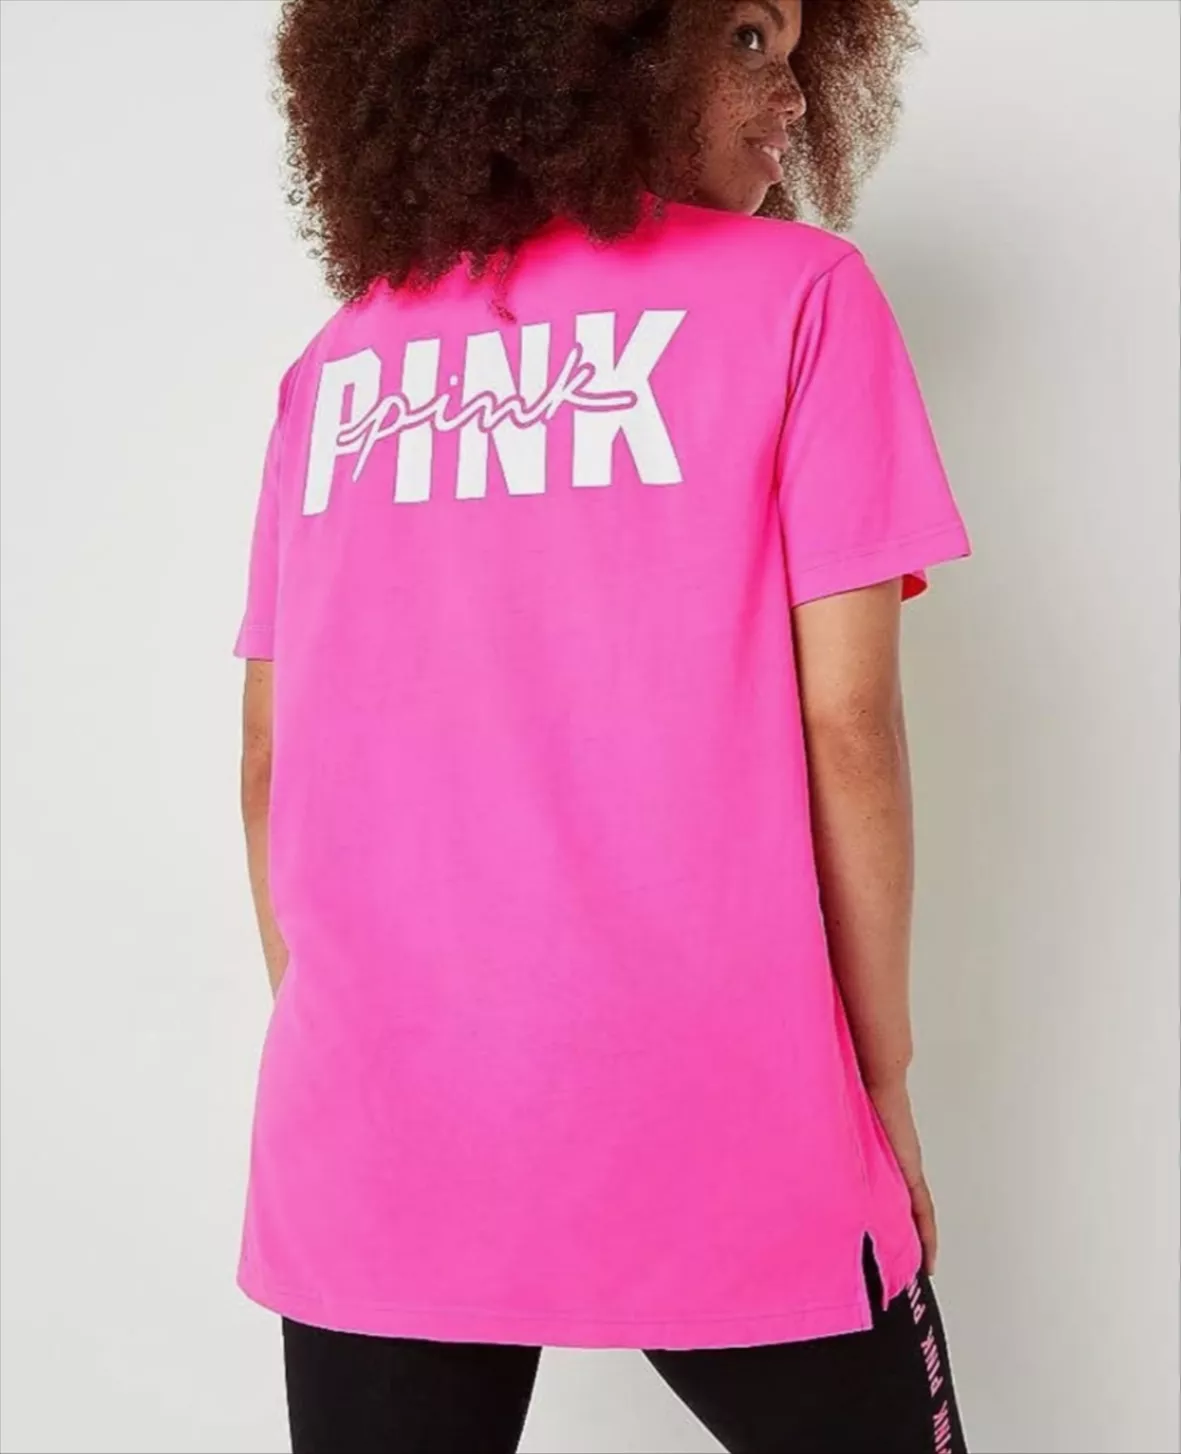 Victoria's Secret Pink Fleece … curated on LTK